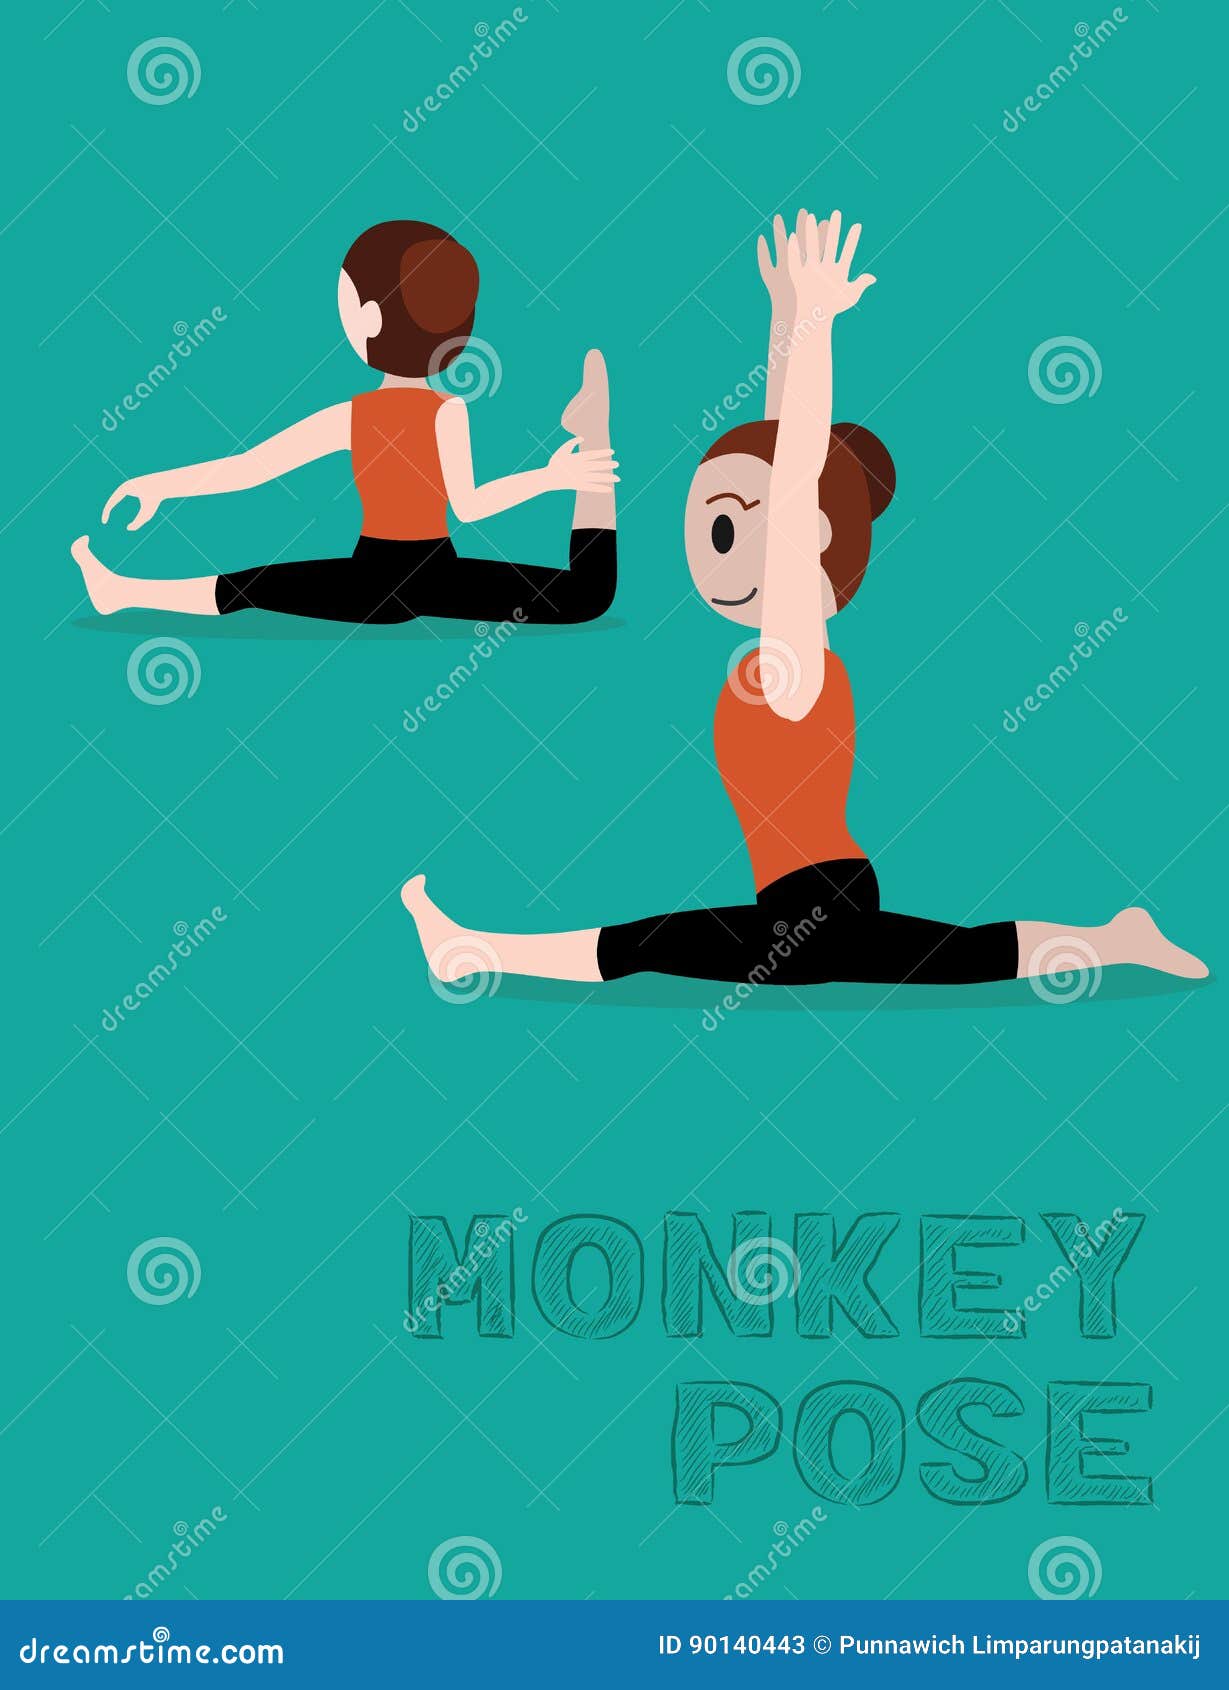 Hanumanasana #shorts #yoga #youtube #flexibility #health #advancedyoga  #monkeypose #hanumanasana - YouTube